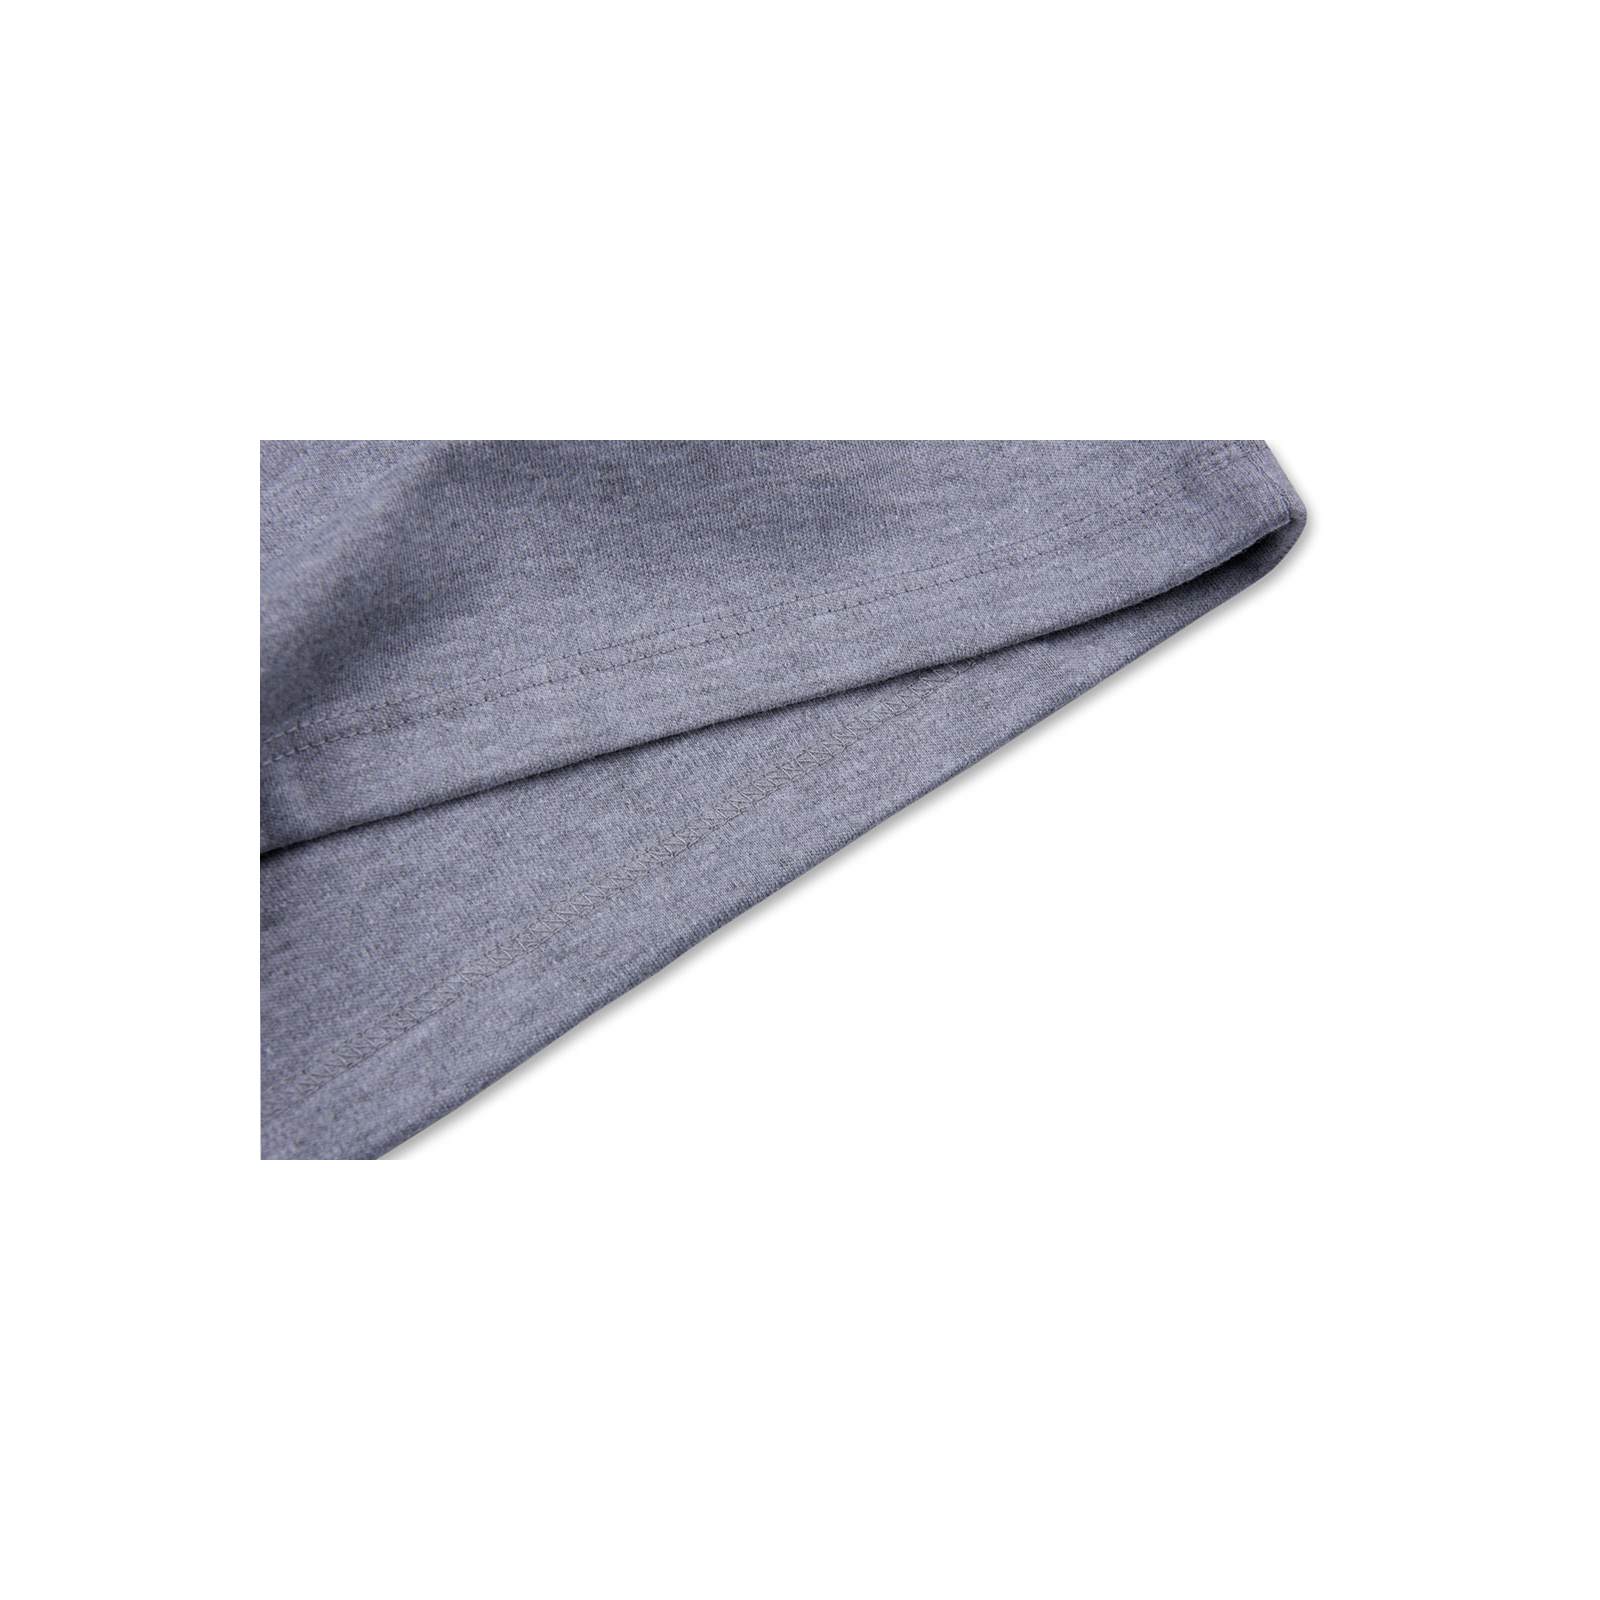 Кофта Lovetti водолазка серая меланжевая (1011-92-gray) изображение 5